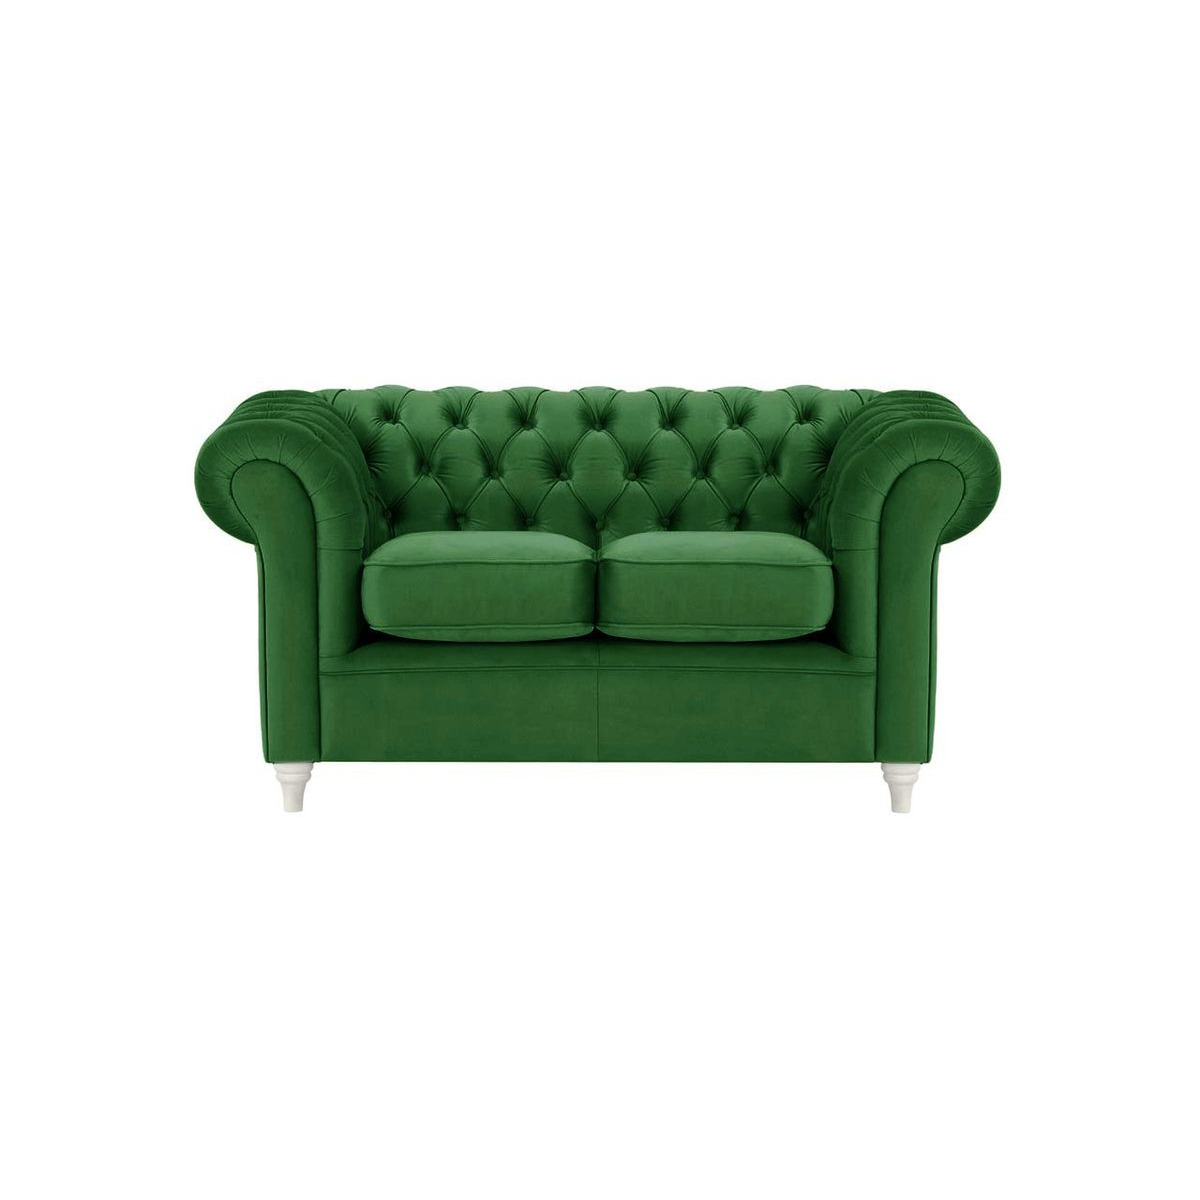 Chesterfield 2 Seater Sofa, dark green, Leg colour: white - image 1